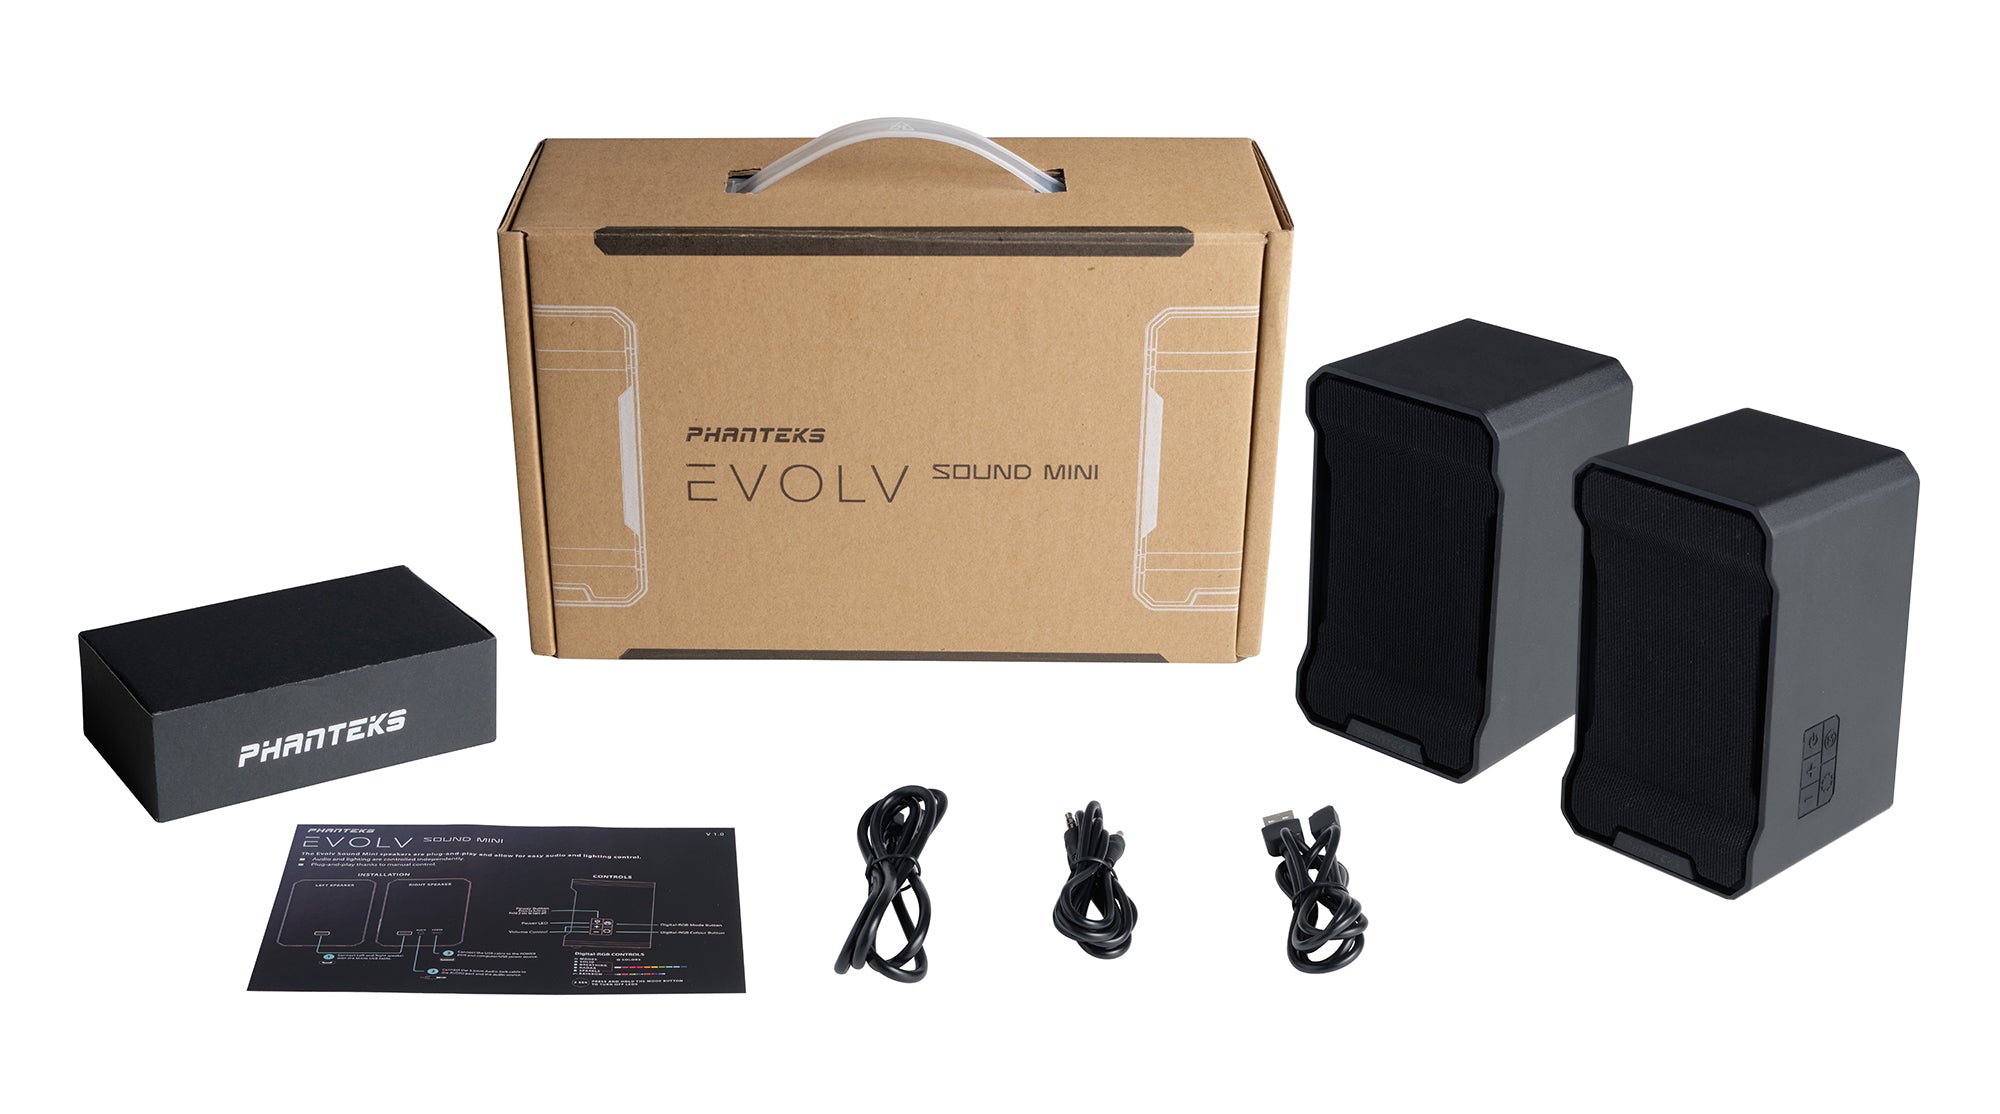 Phanteks Evolv Sound Mini Speakers